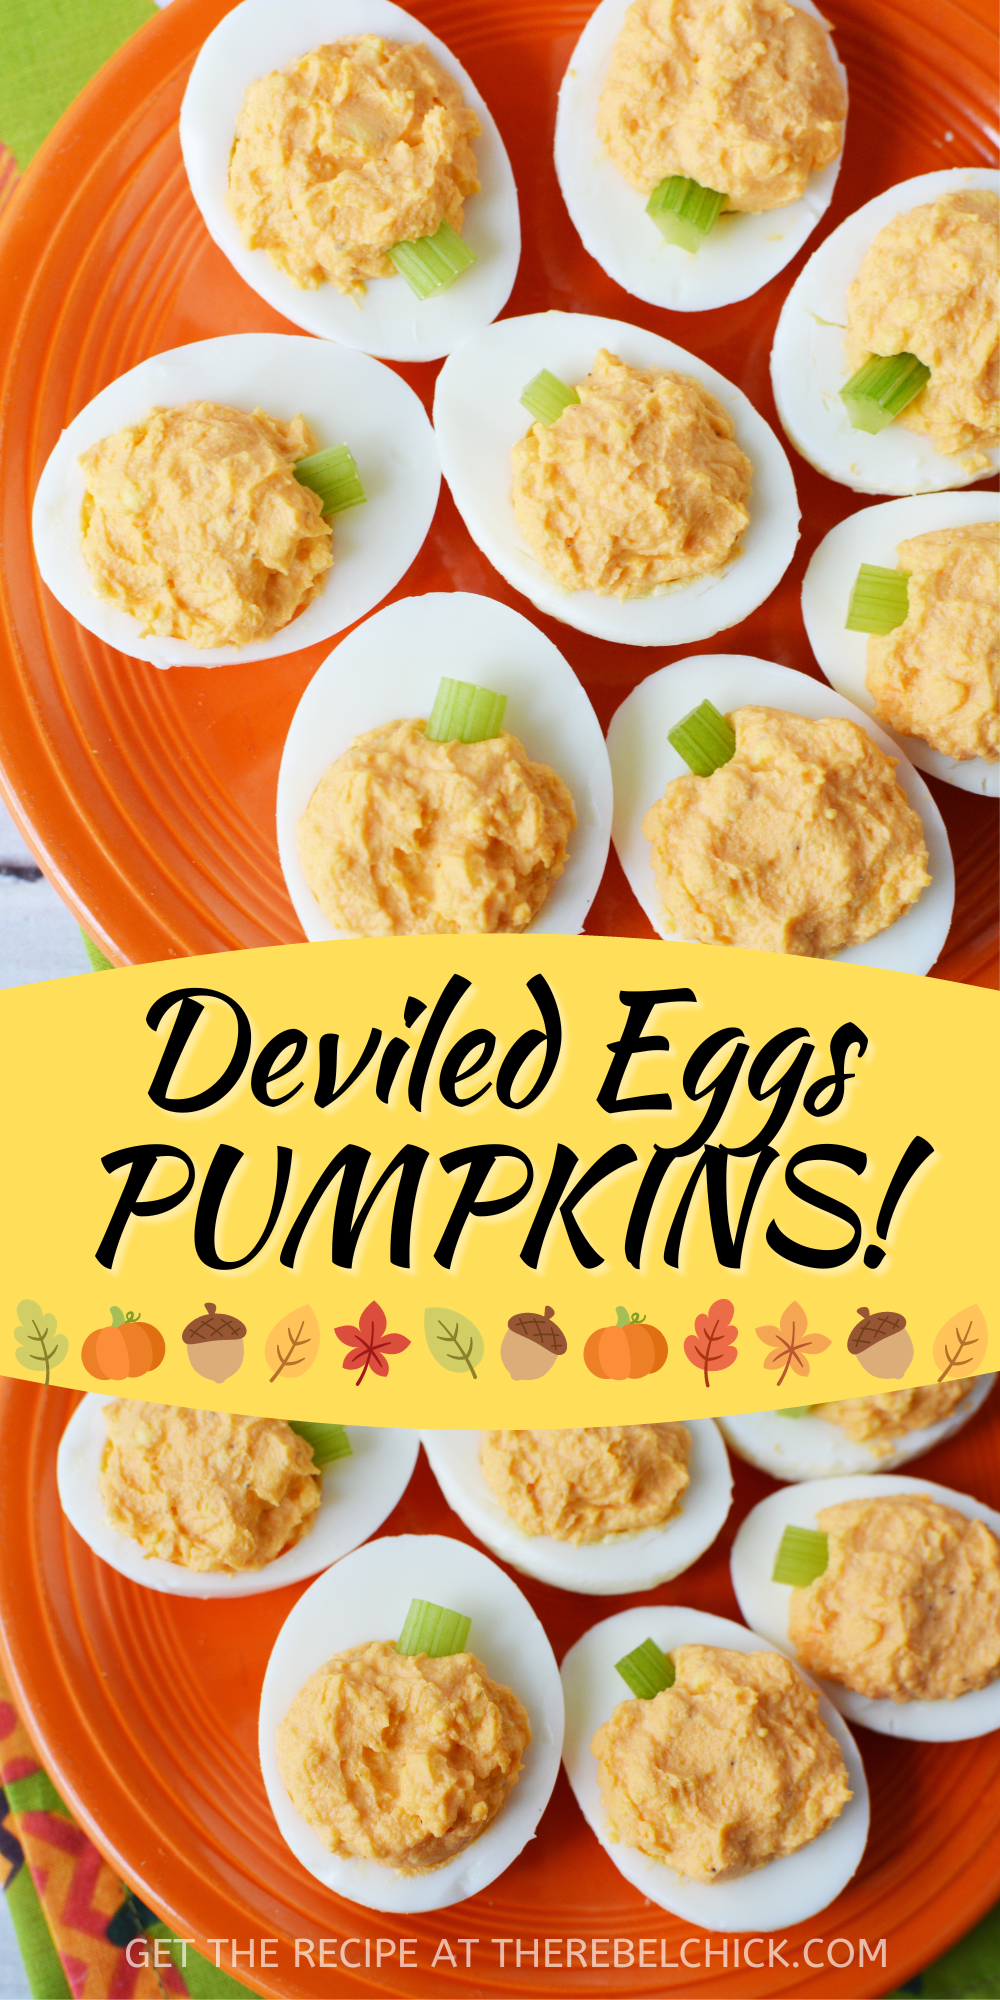 deviled eggs with orange egg filling to look like pumpkins